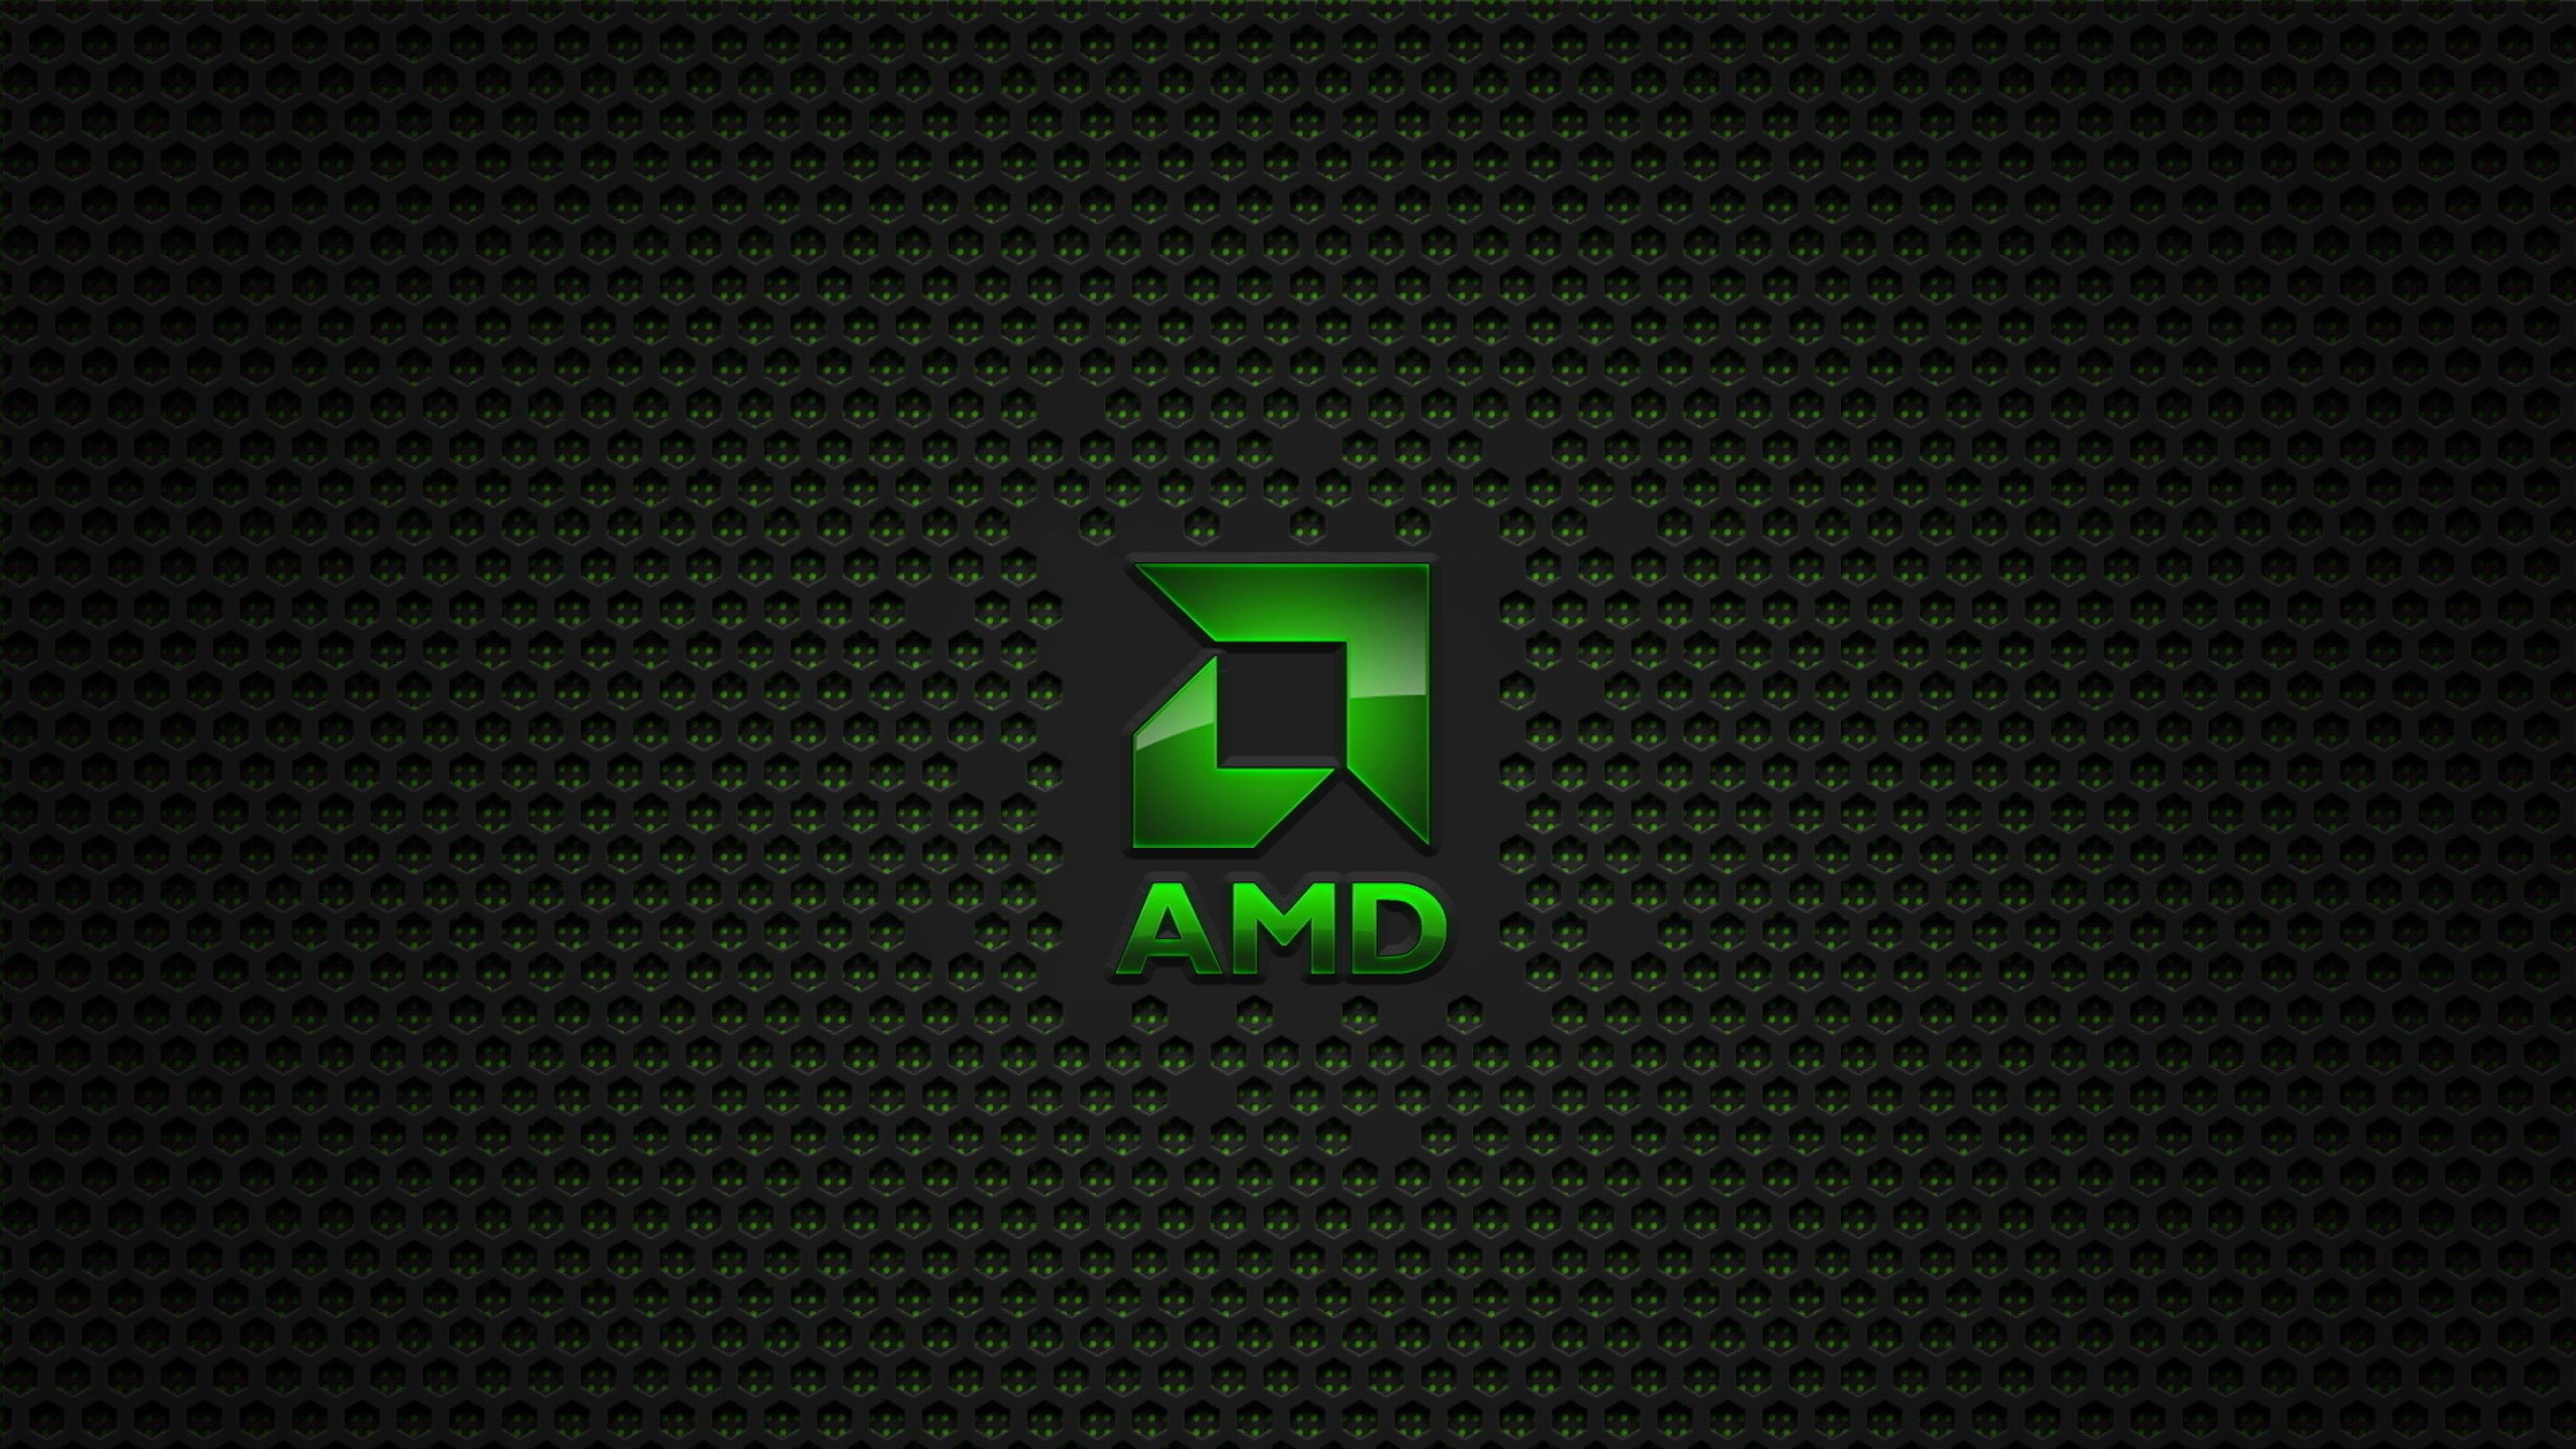 AMD 4K Wallpaper 3840x2160 Windows 10